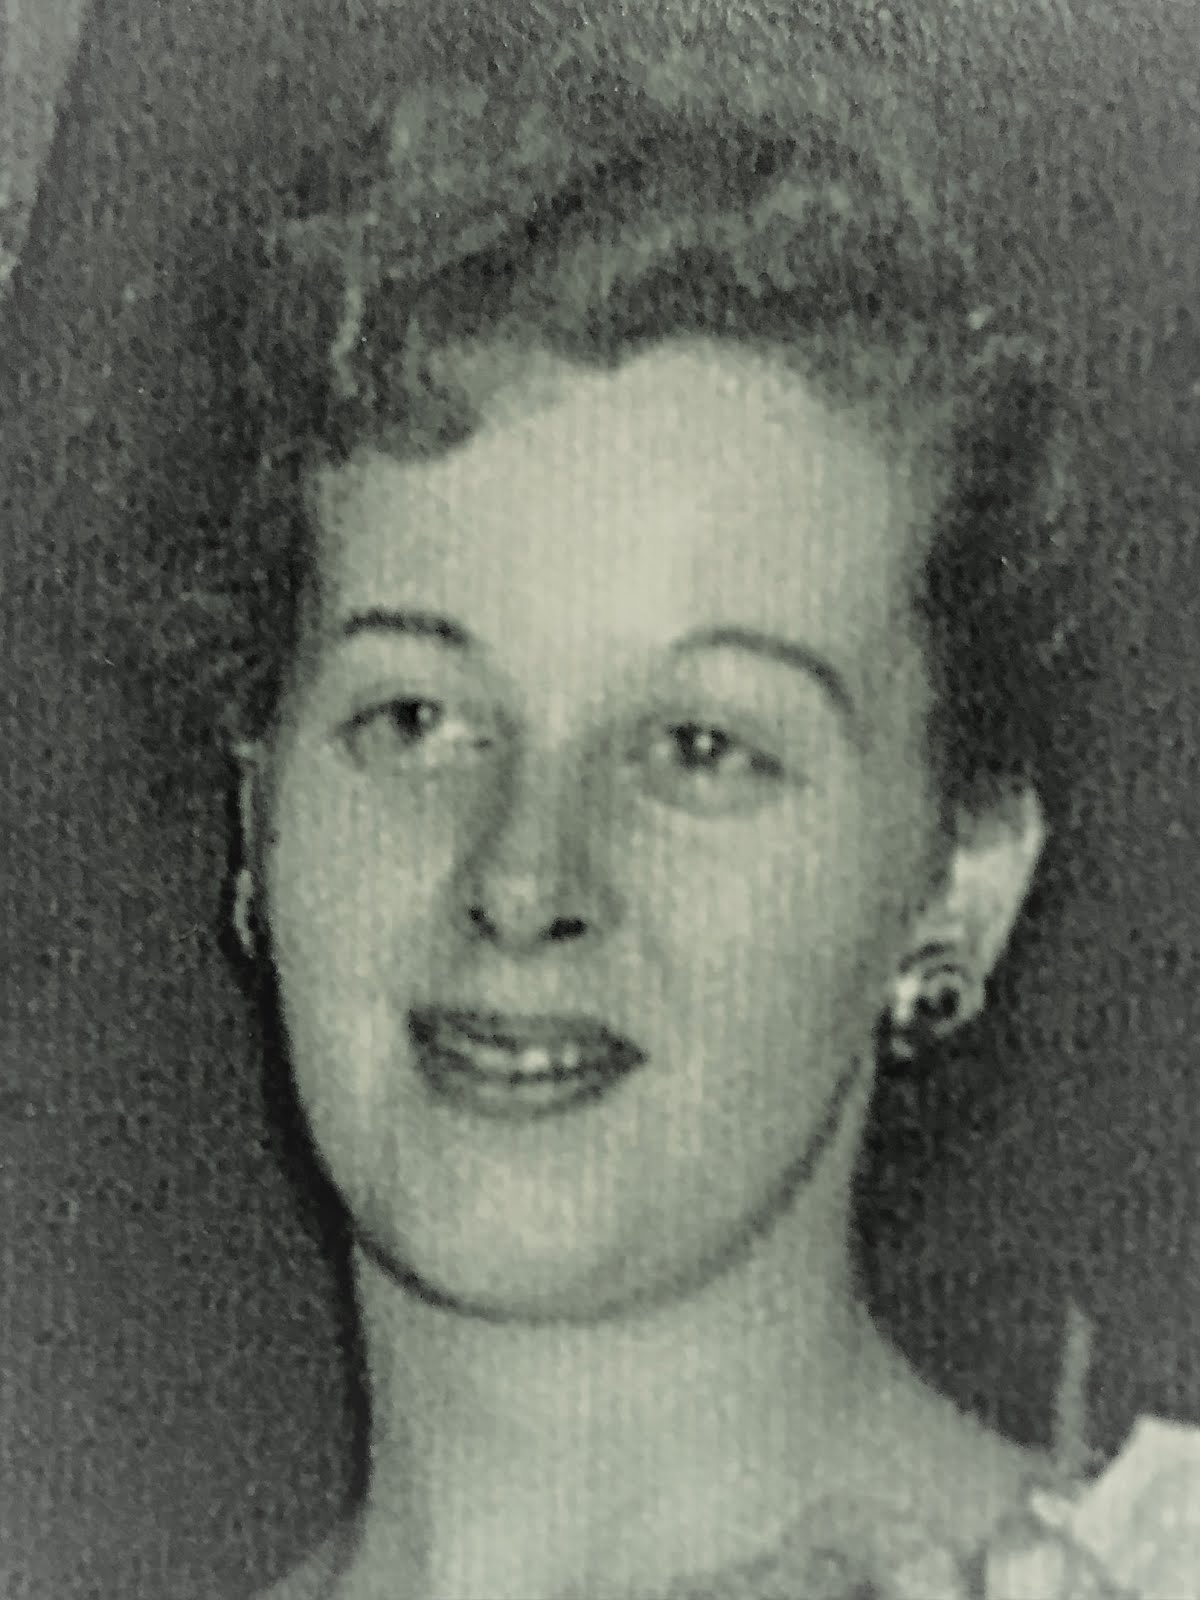 MOM 1957